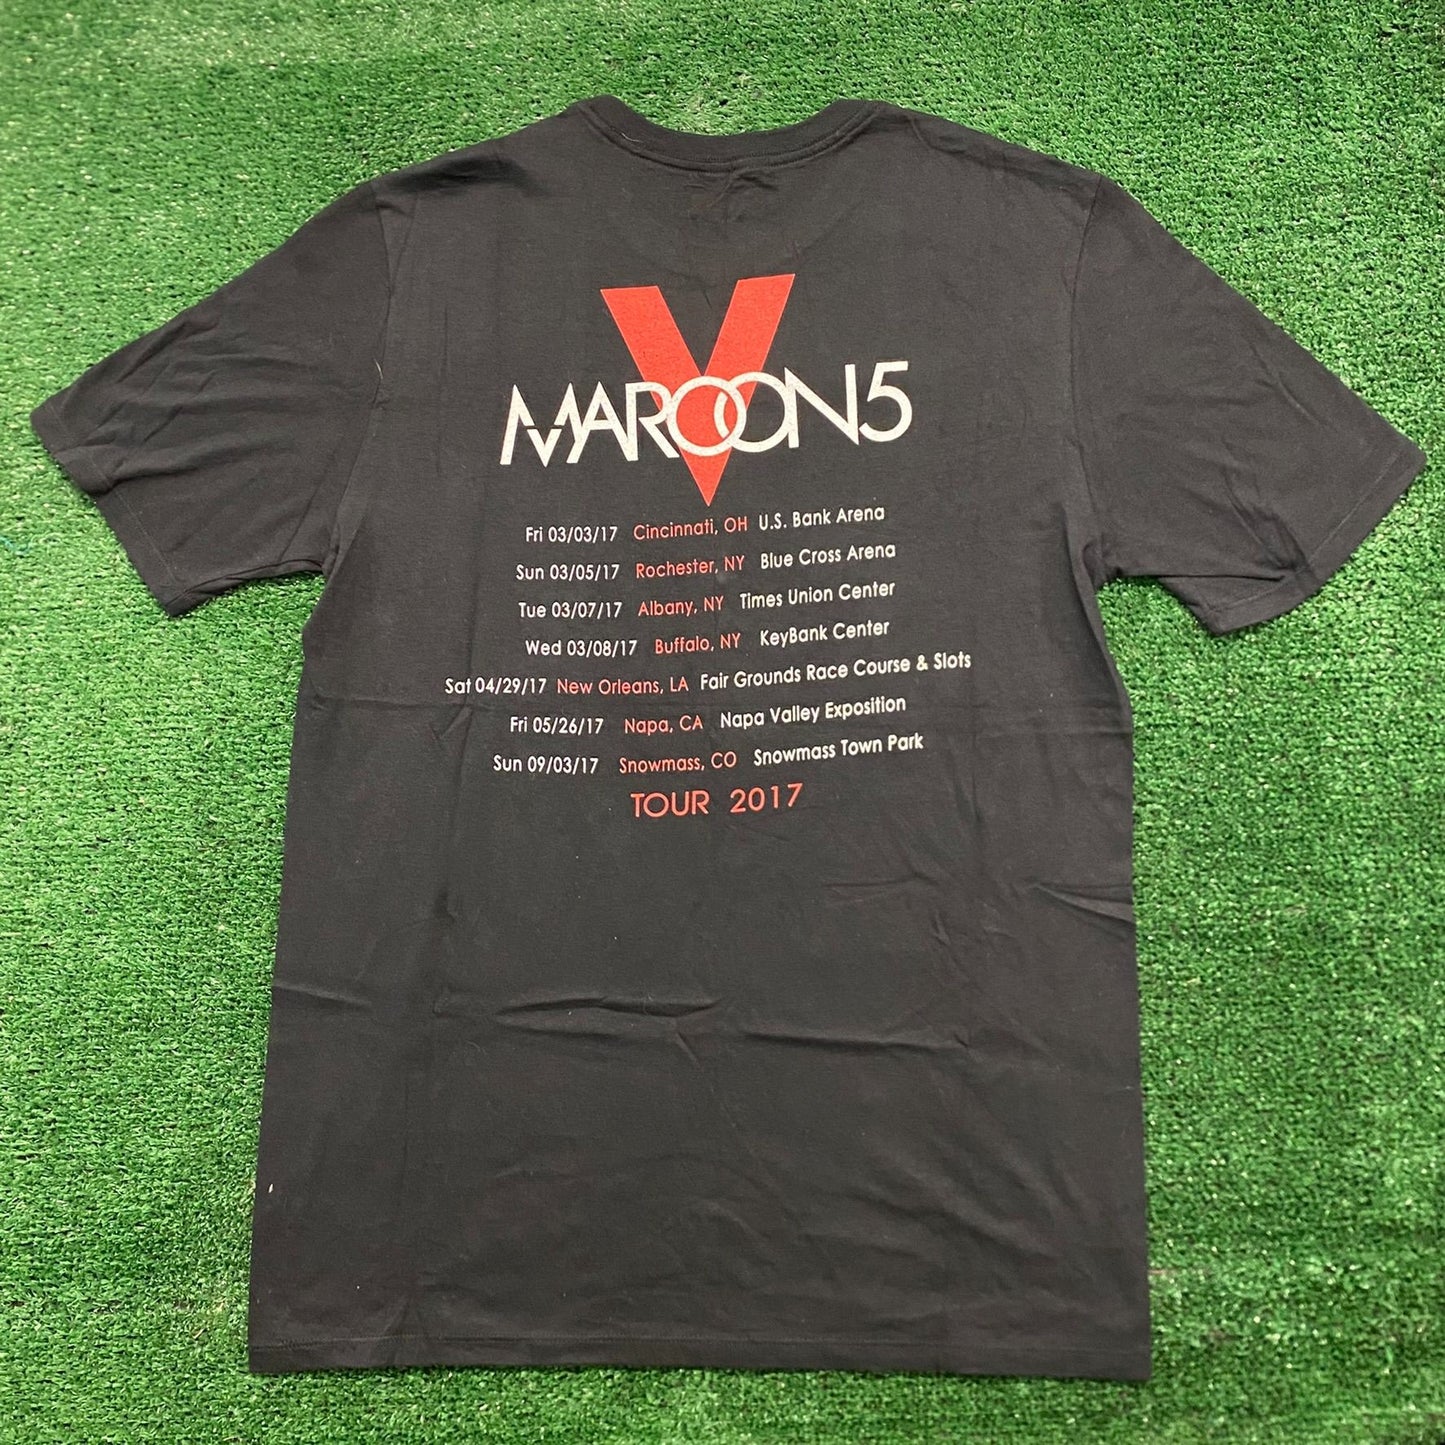 Maroon 5 Vintage Pop Music Band T-Shirt